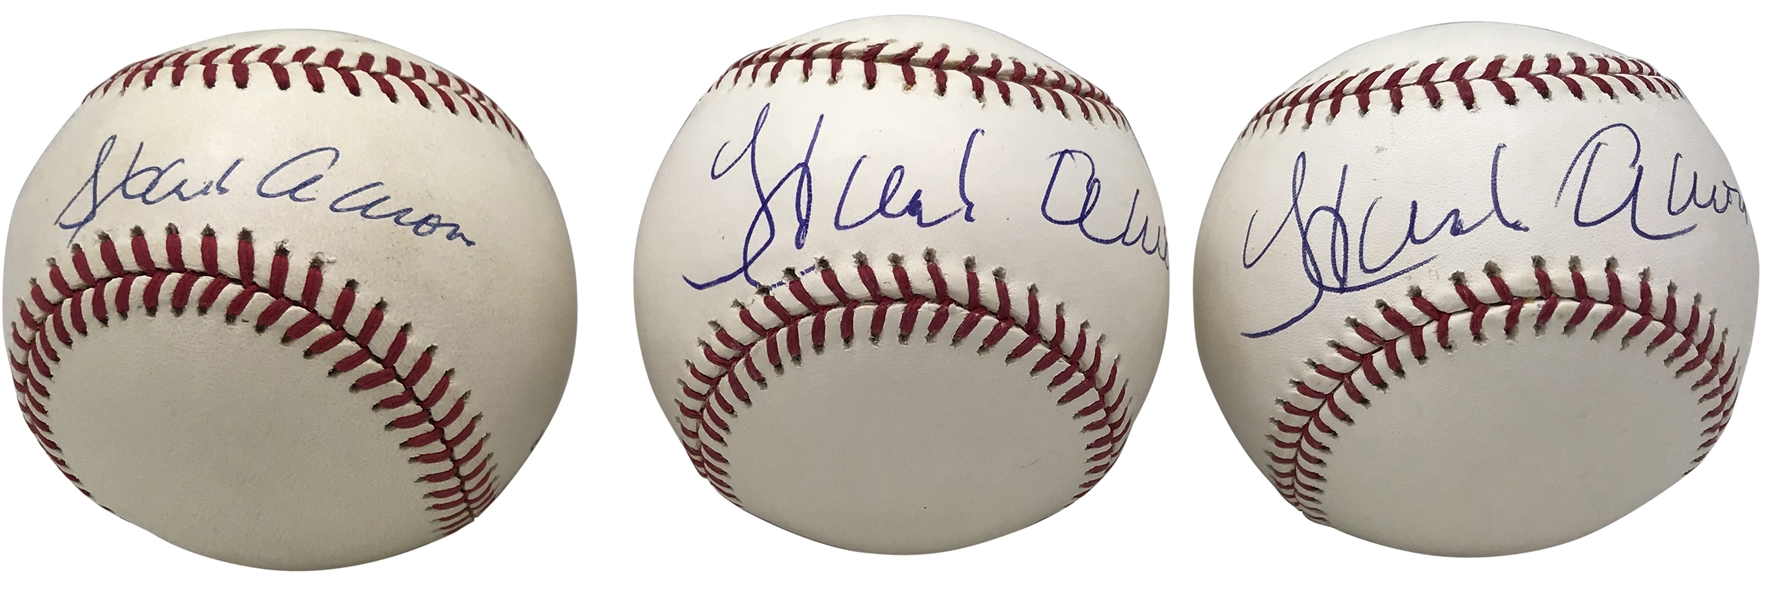 Hank Aaron Lot of Three (3) Signed Official Baseballs (PSA/DNA)